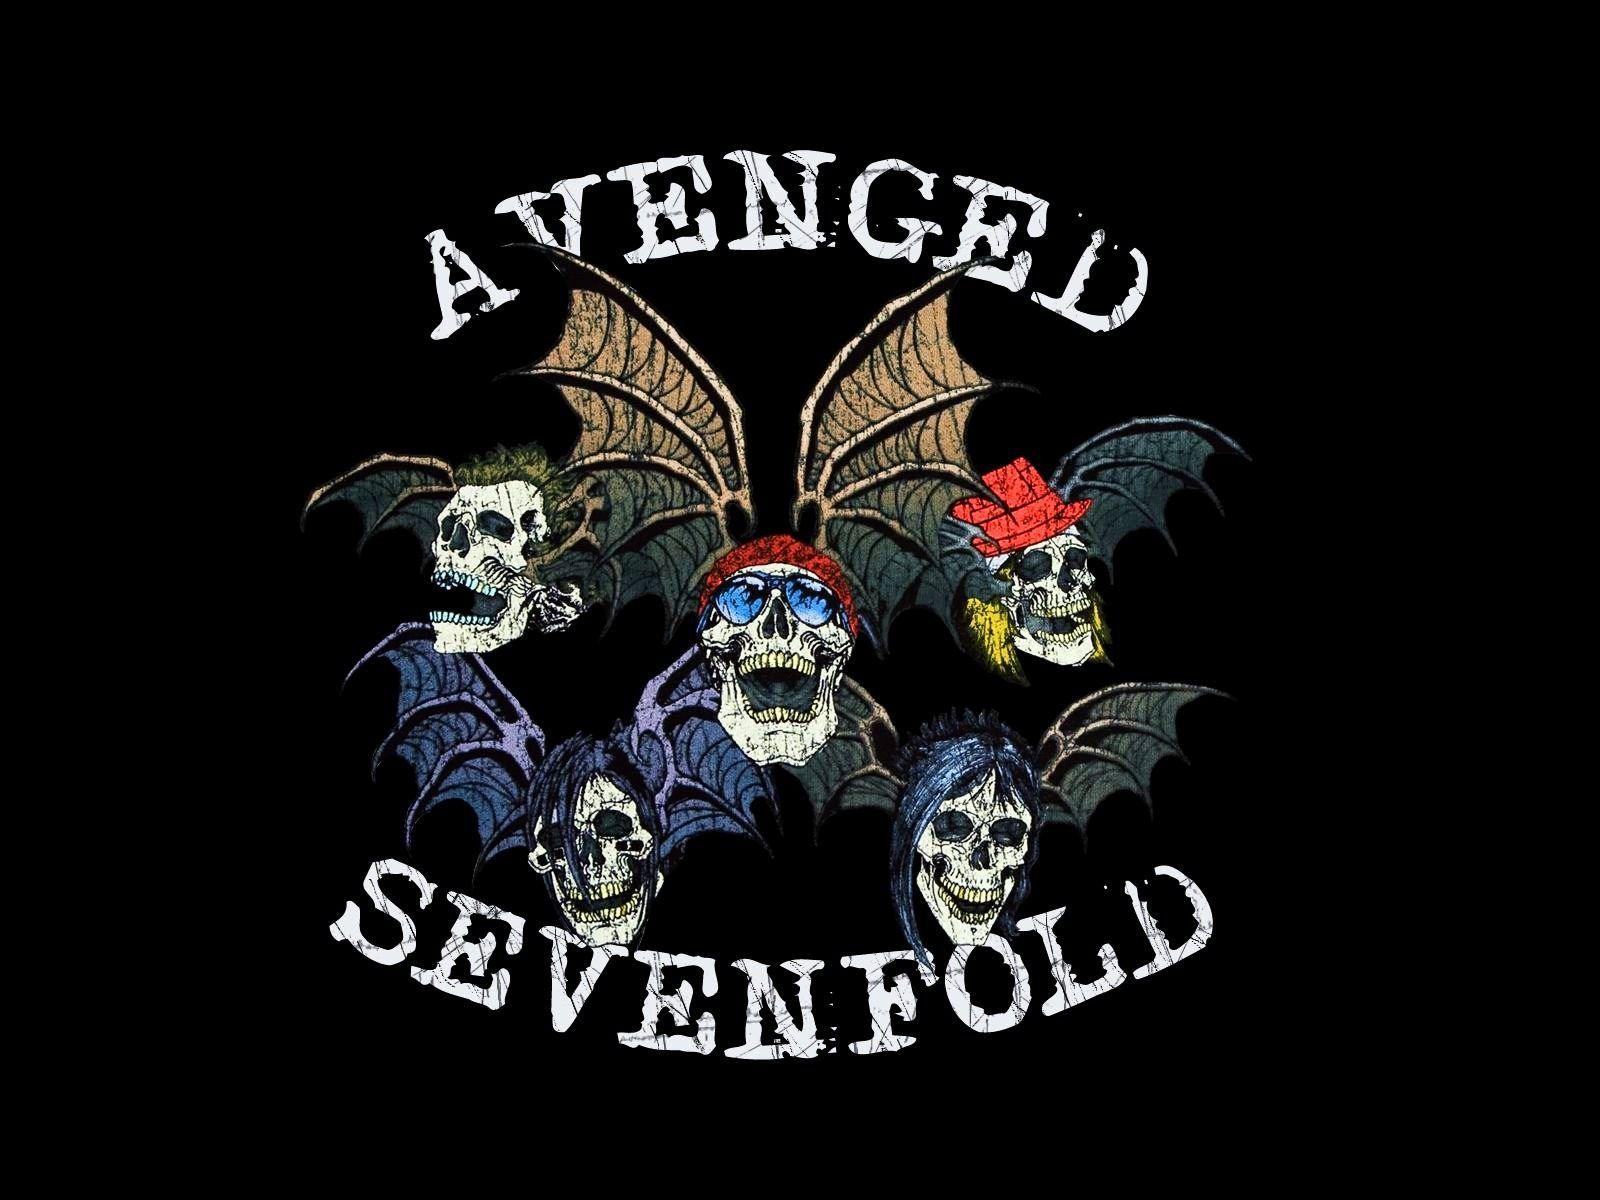 HD Avenged Sevenfold Wallpaper and Photo. HD Music Wallpaper